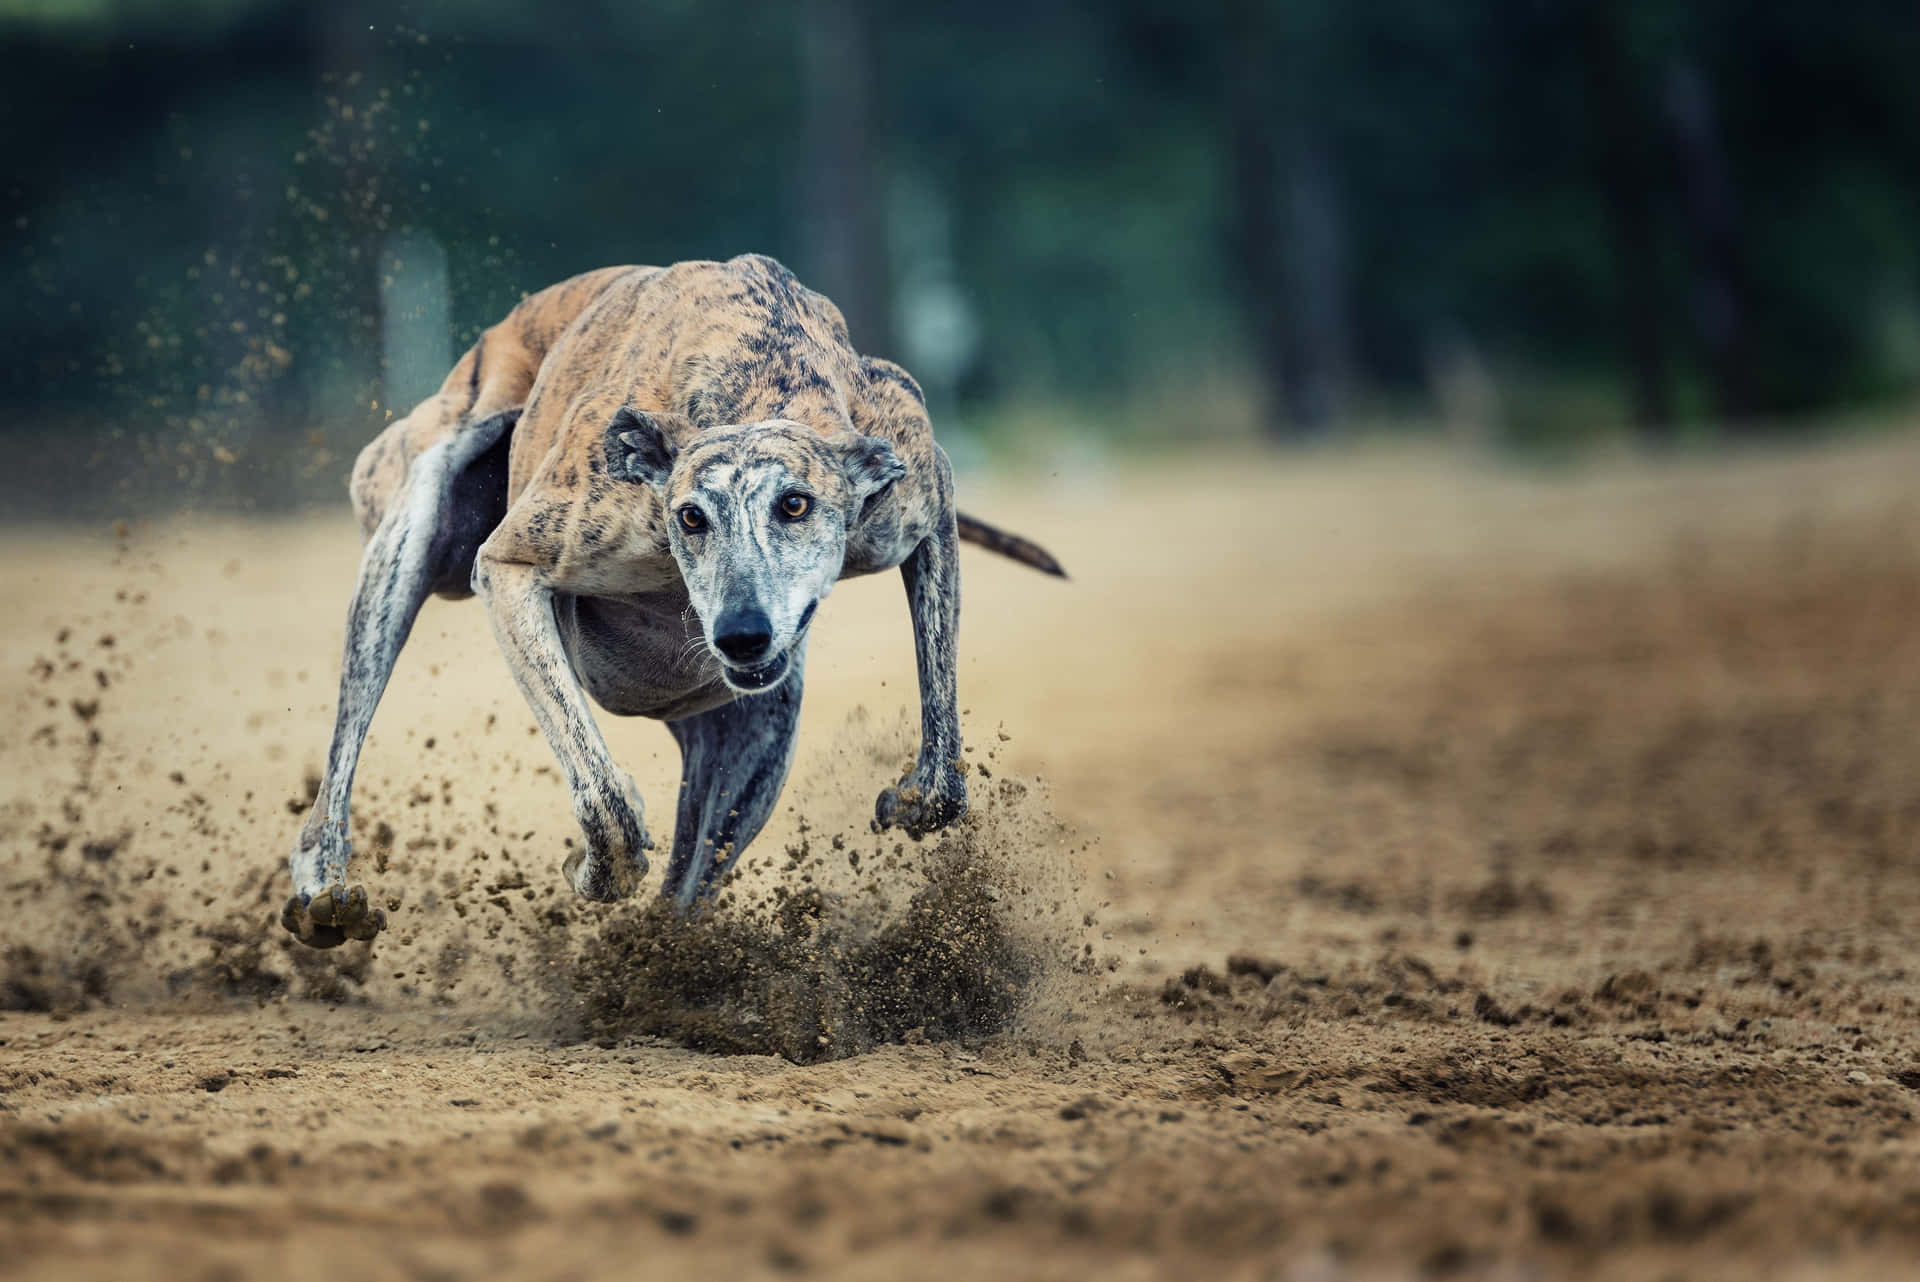 Greyhound Dog Running On A Dirt Track